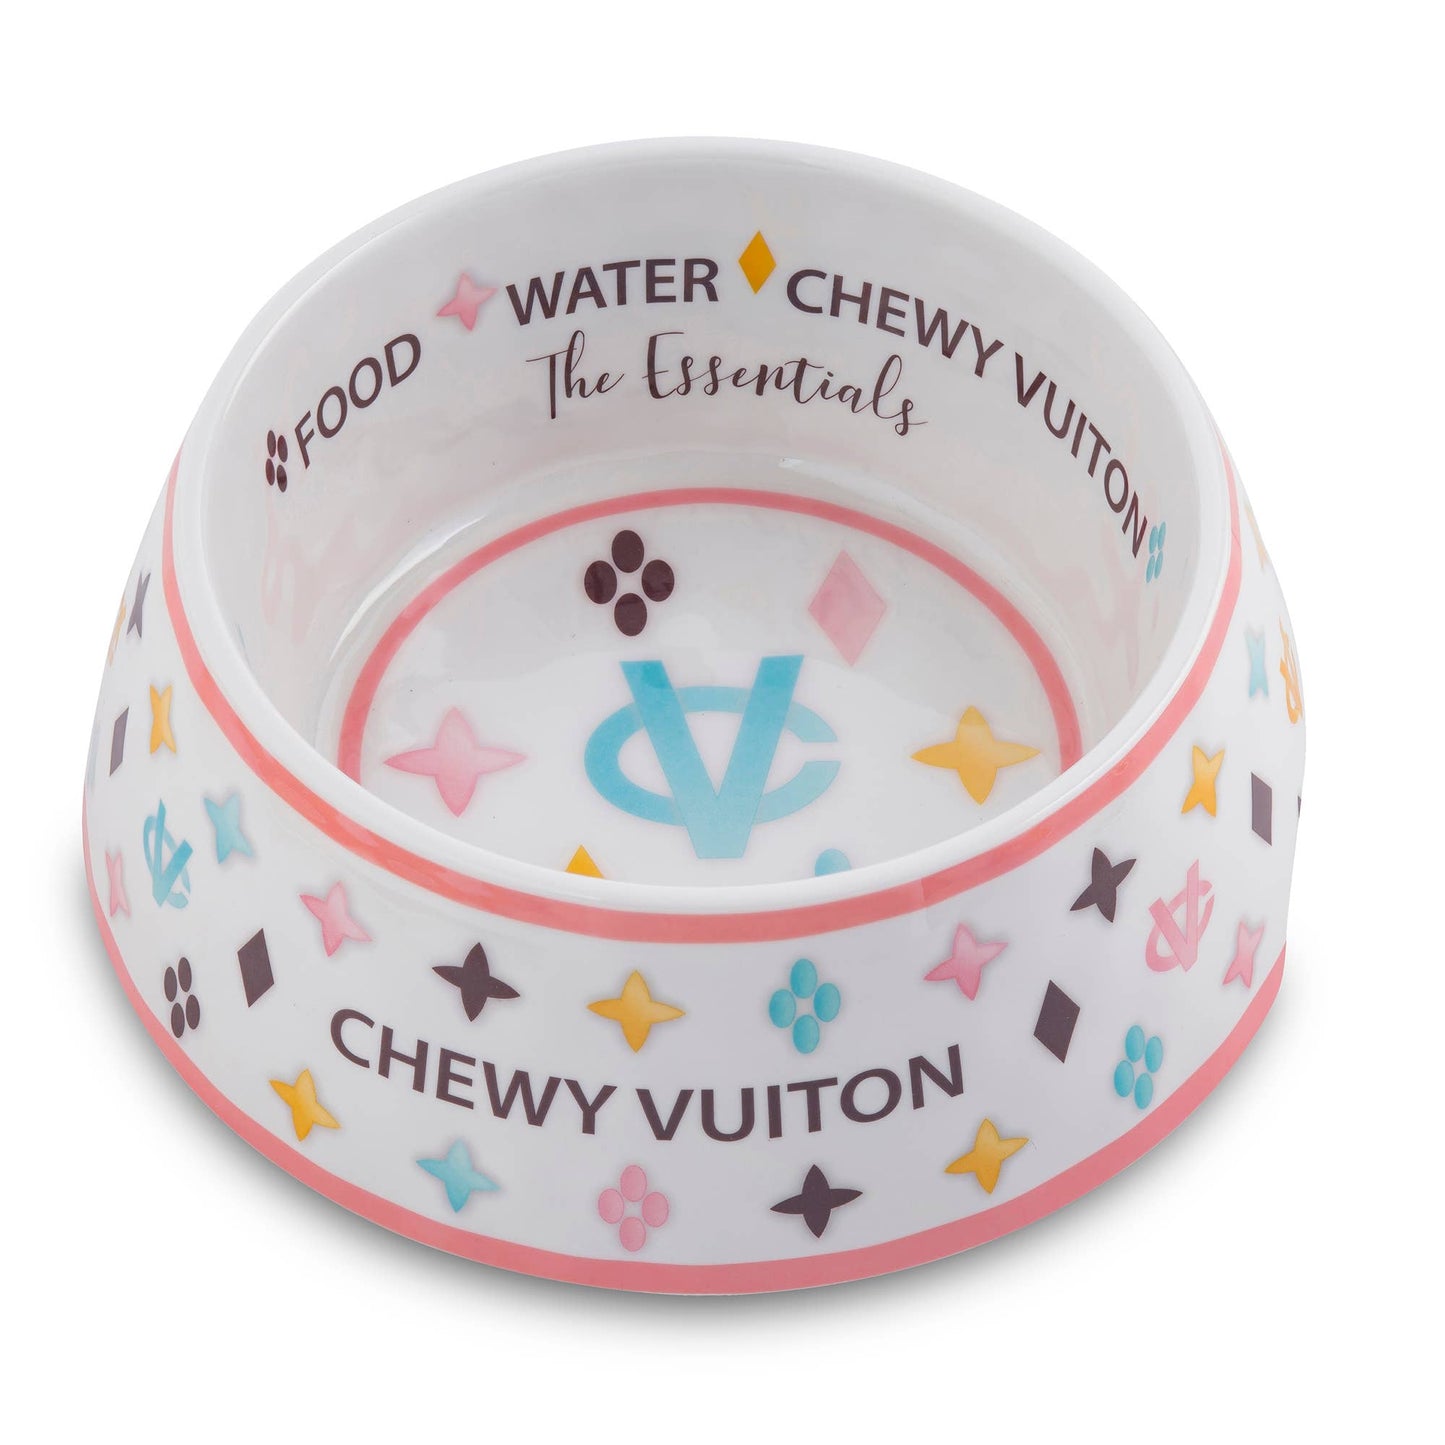 White Chewy Vuiton Dog Bowl - large